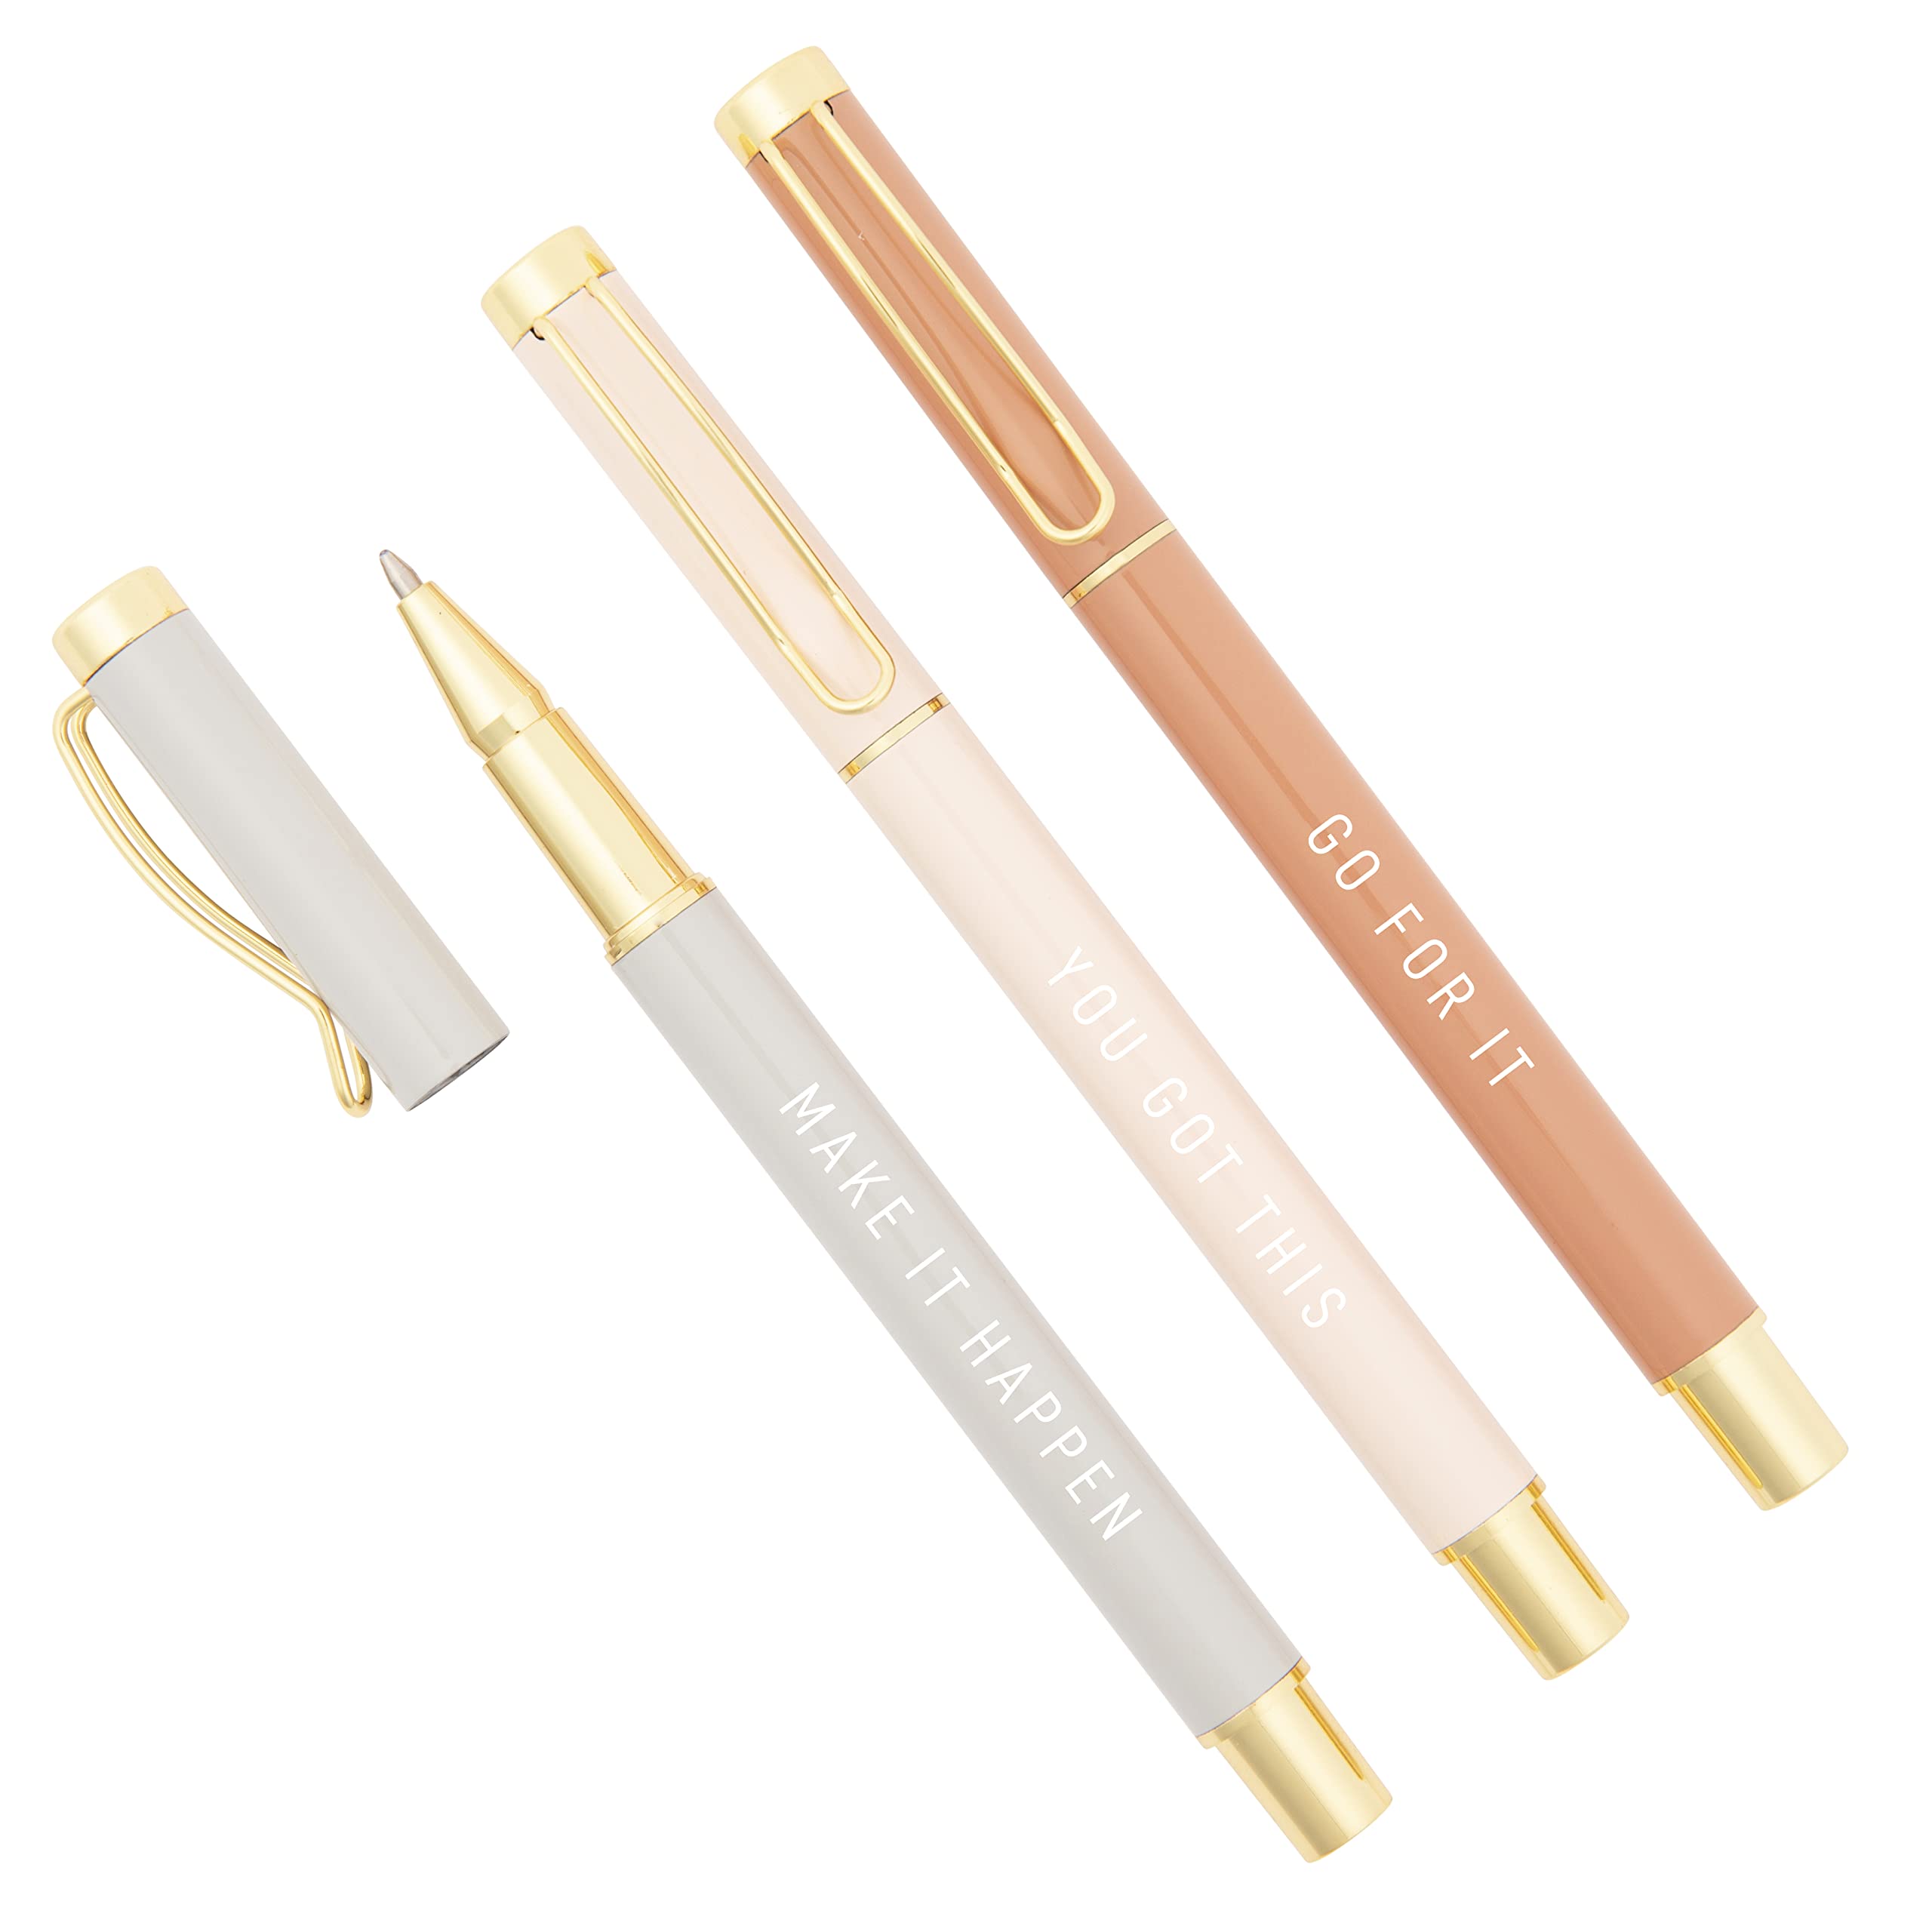 Sweet Water Decor You Got This Metal Pen Set | Inspirational Gifts for Women | Office Supplies | Cute Pens | Desk Decor | Office